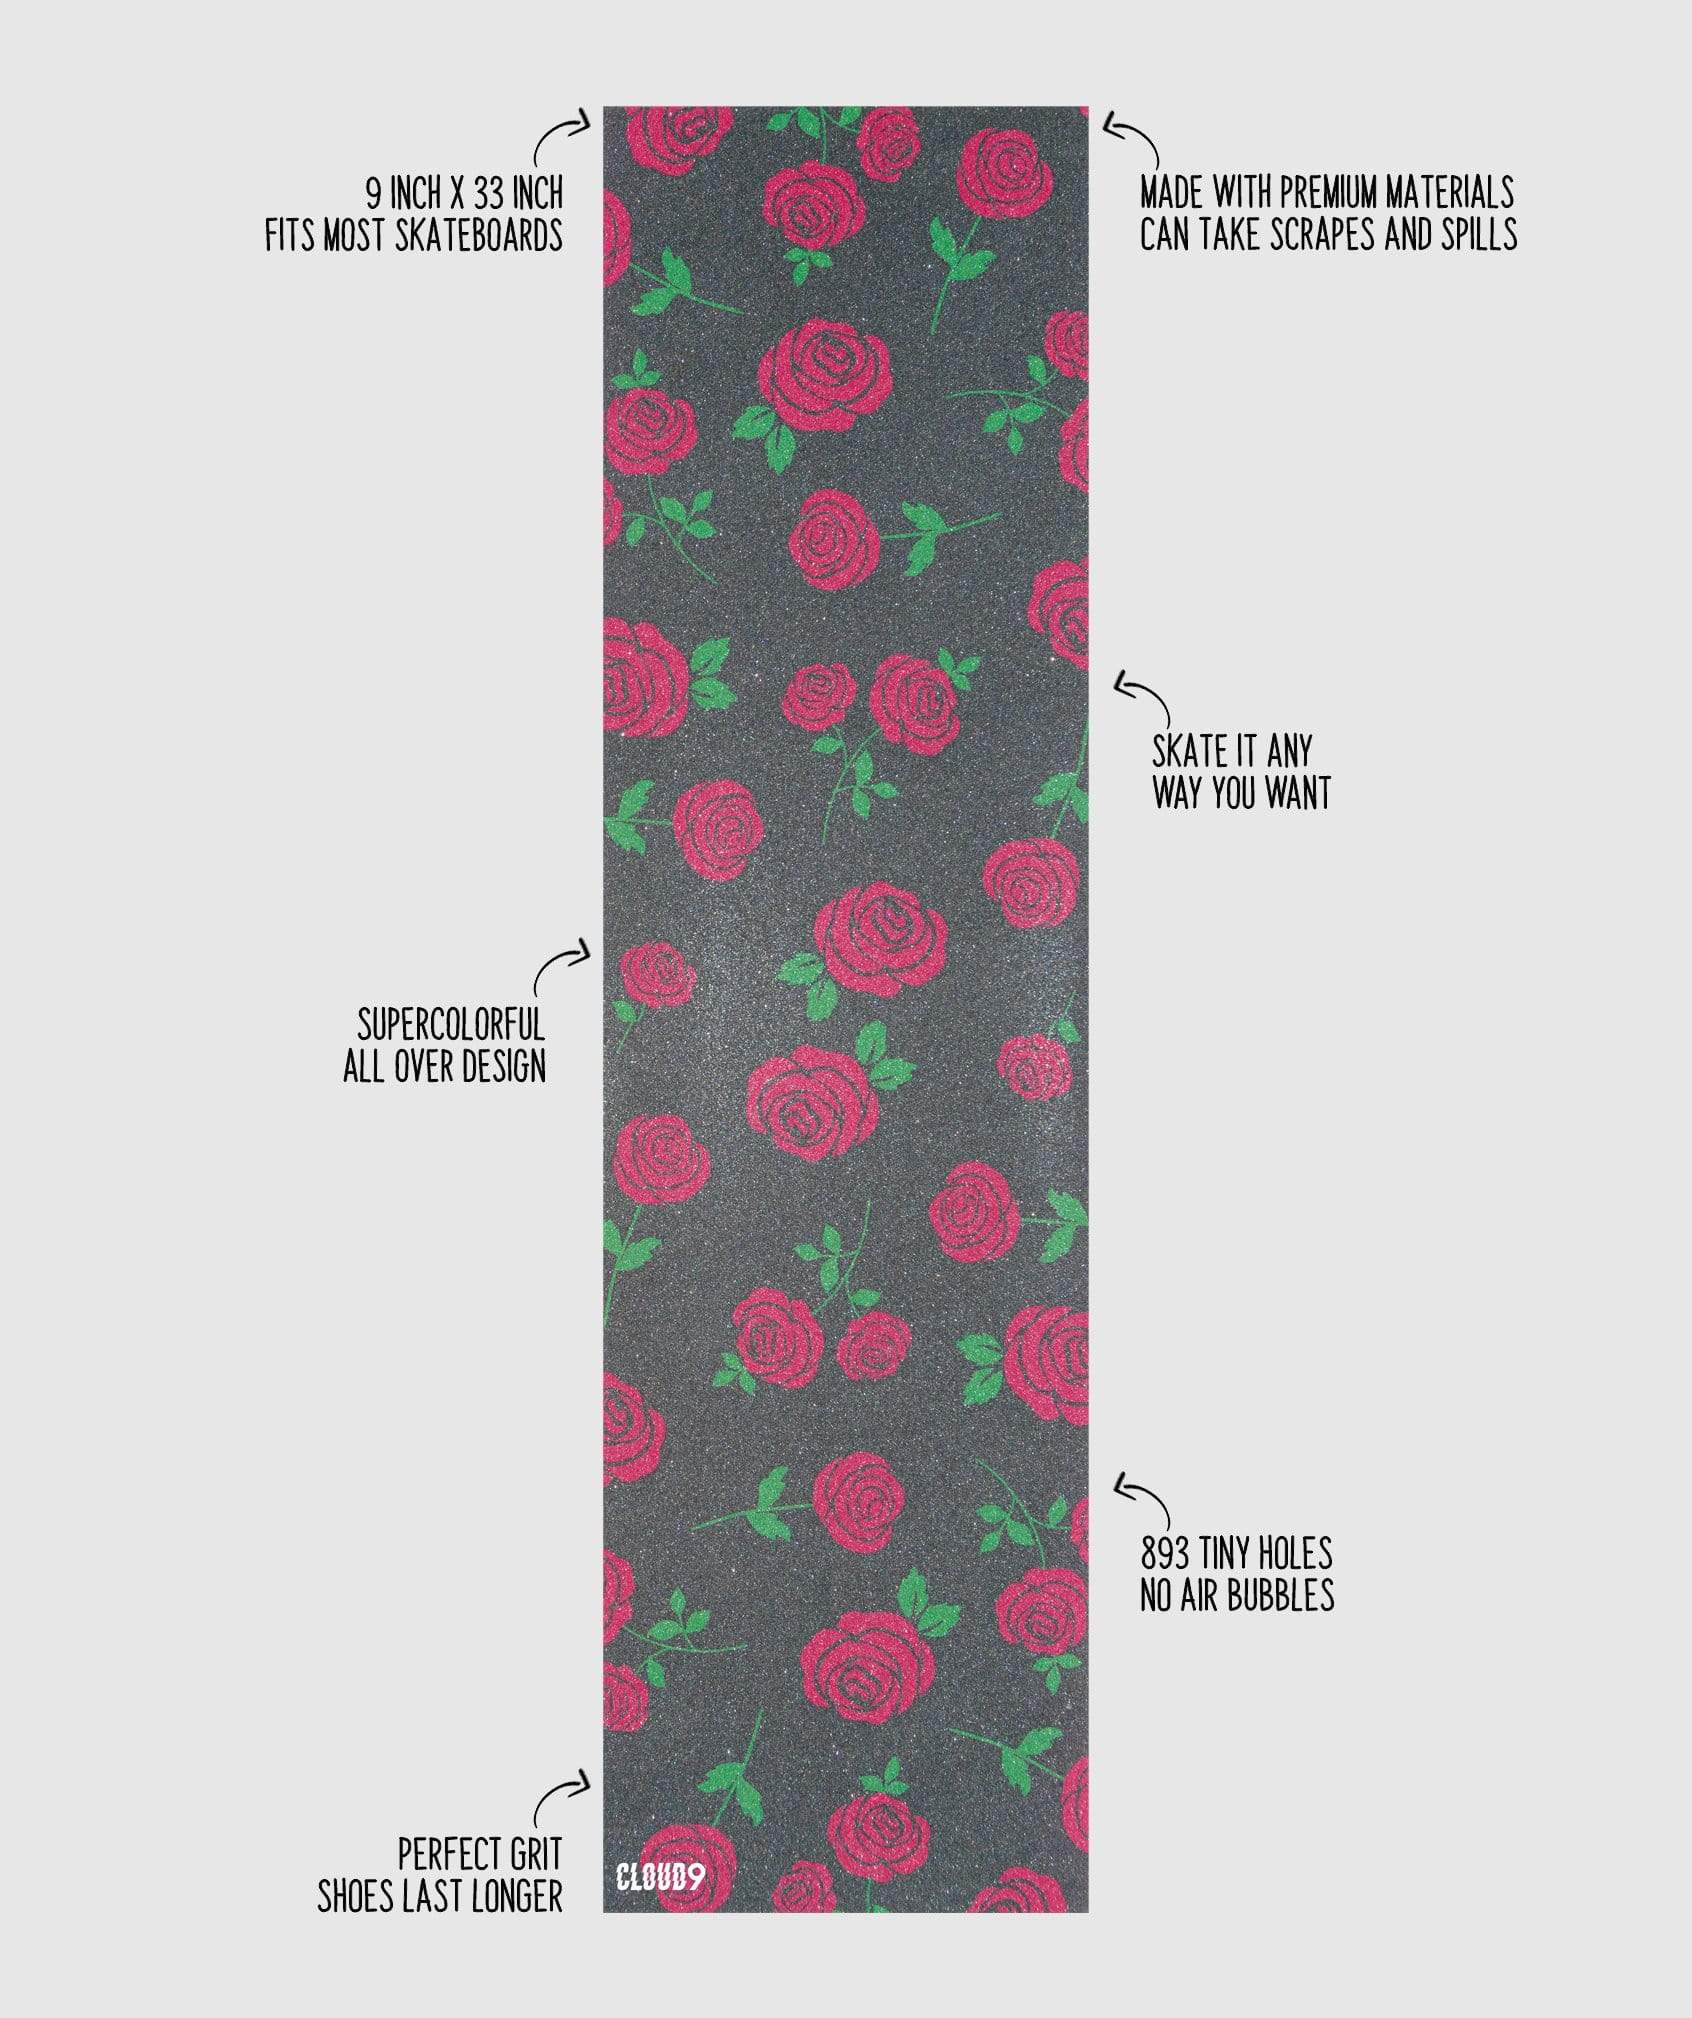 What makes Cloud 9 Roses Skateboard Grip so good?